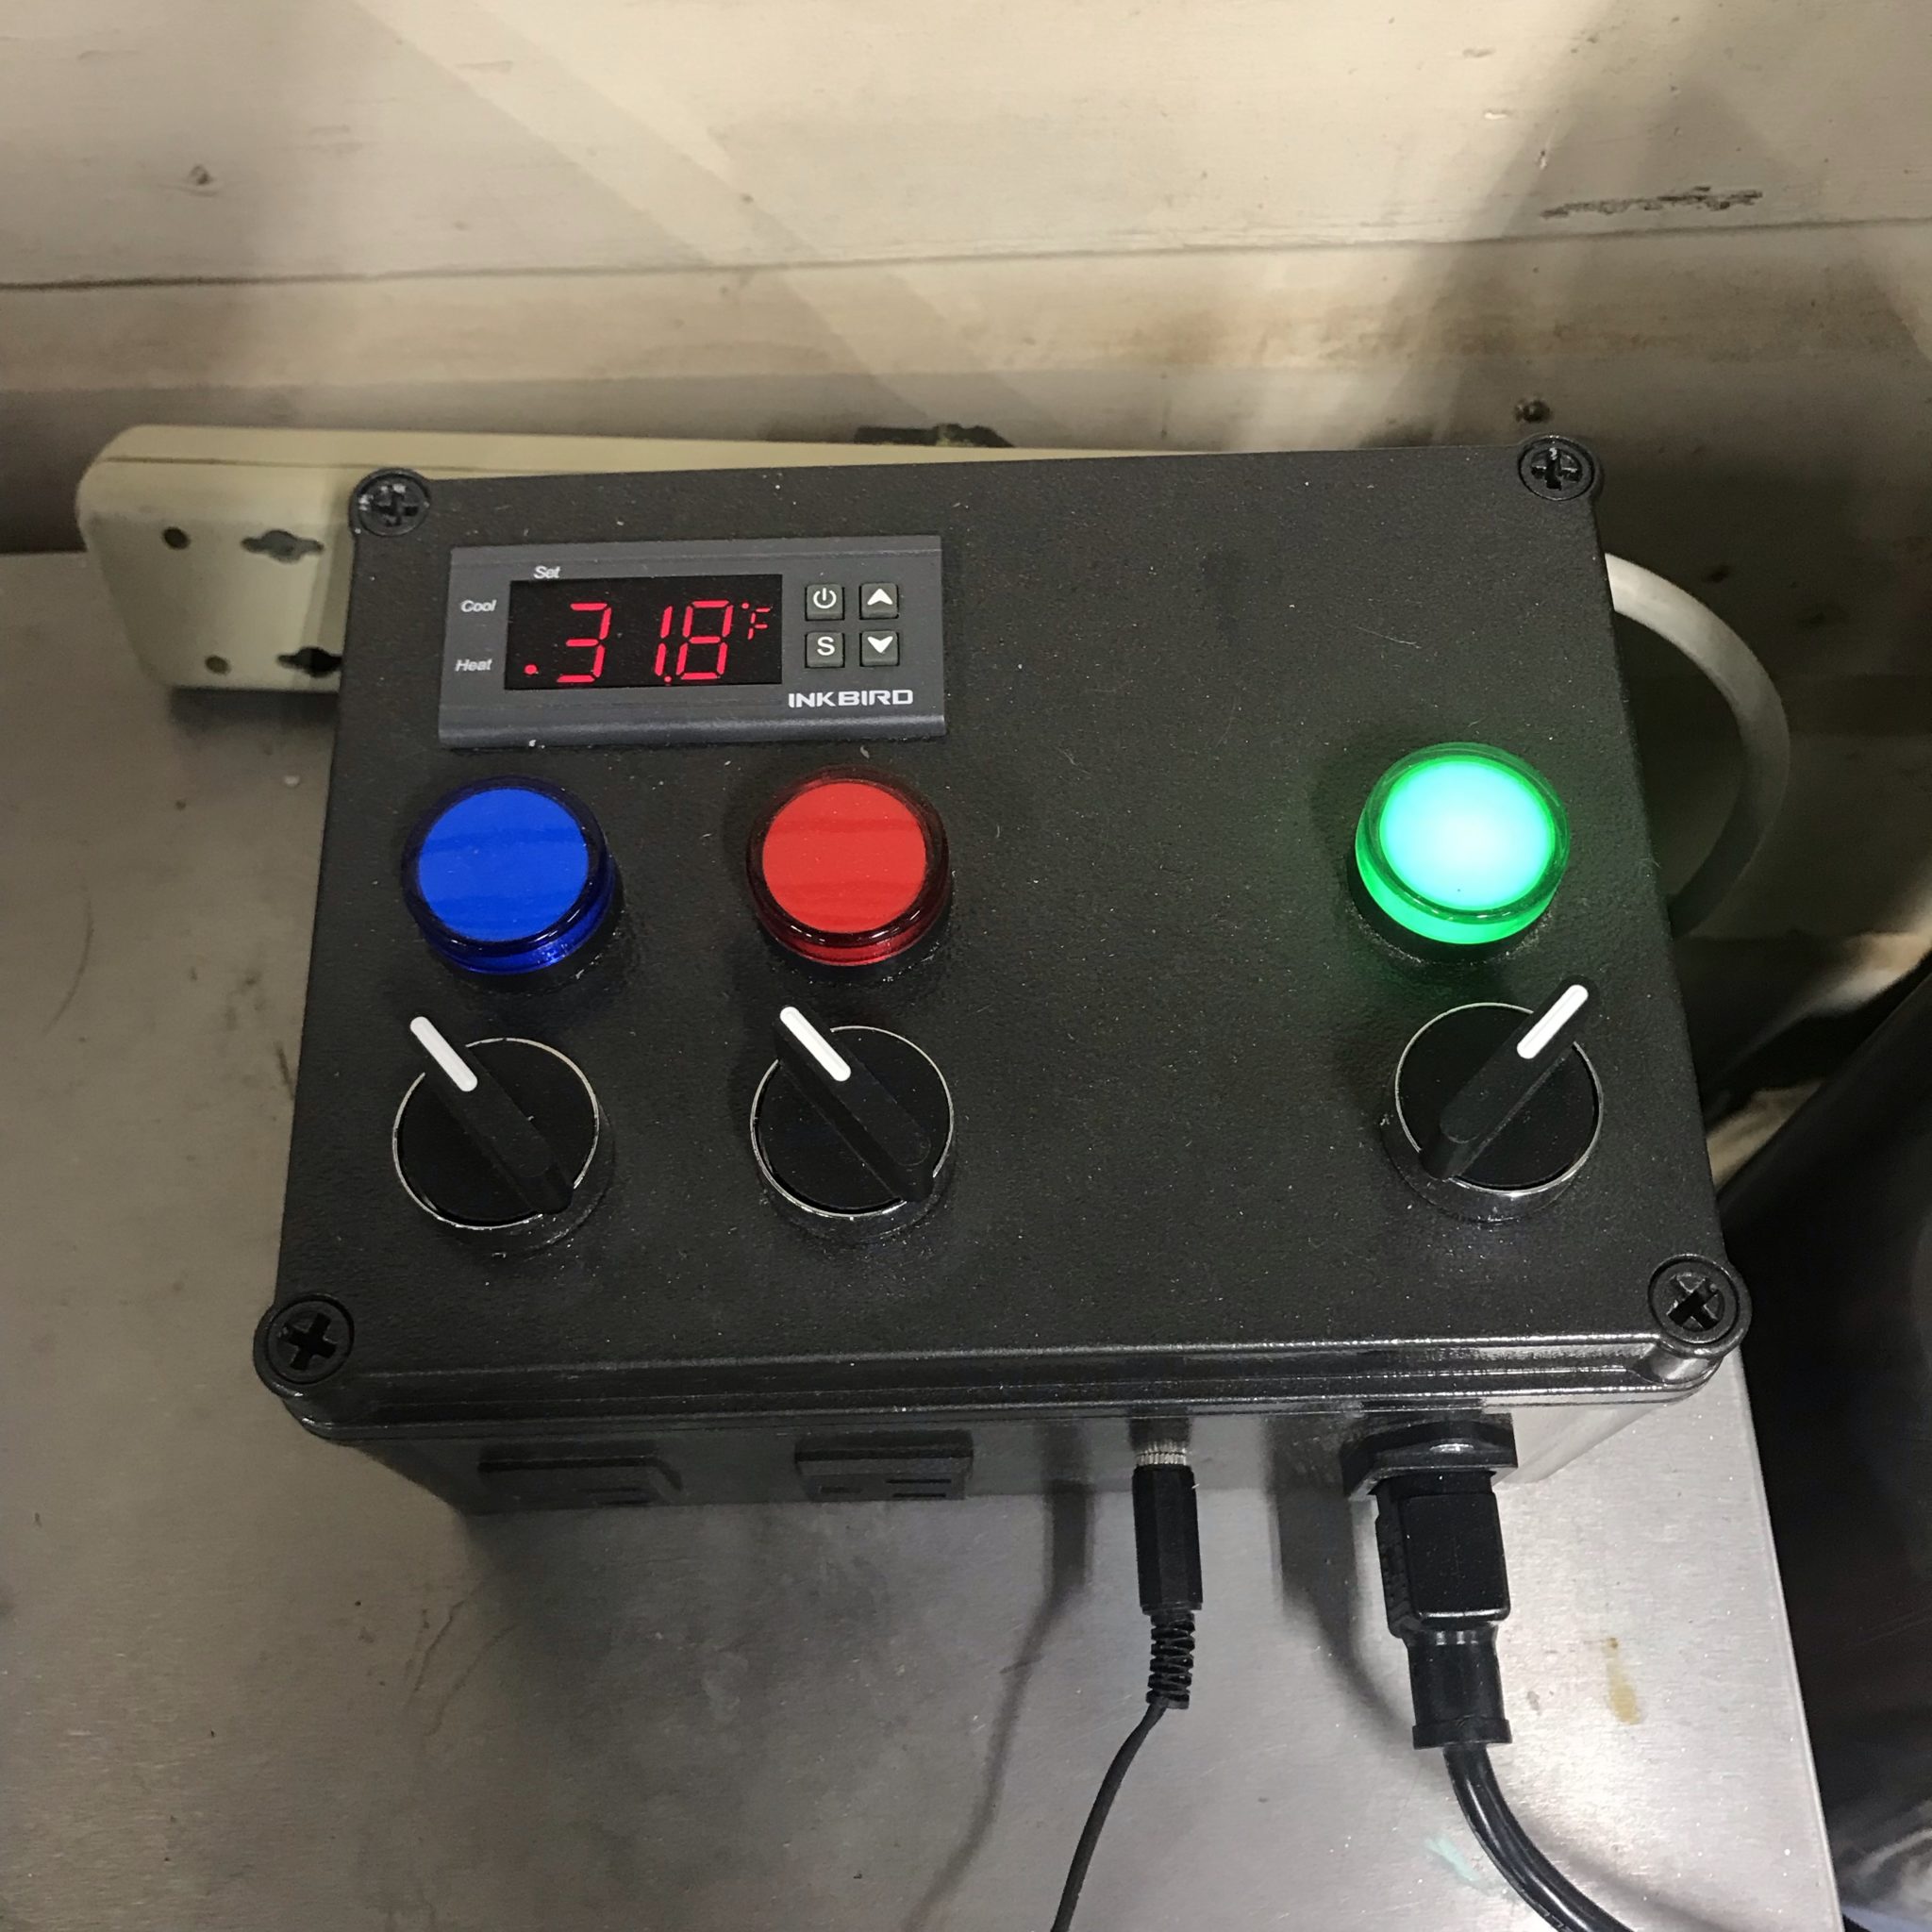 Building a Temperature Controller